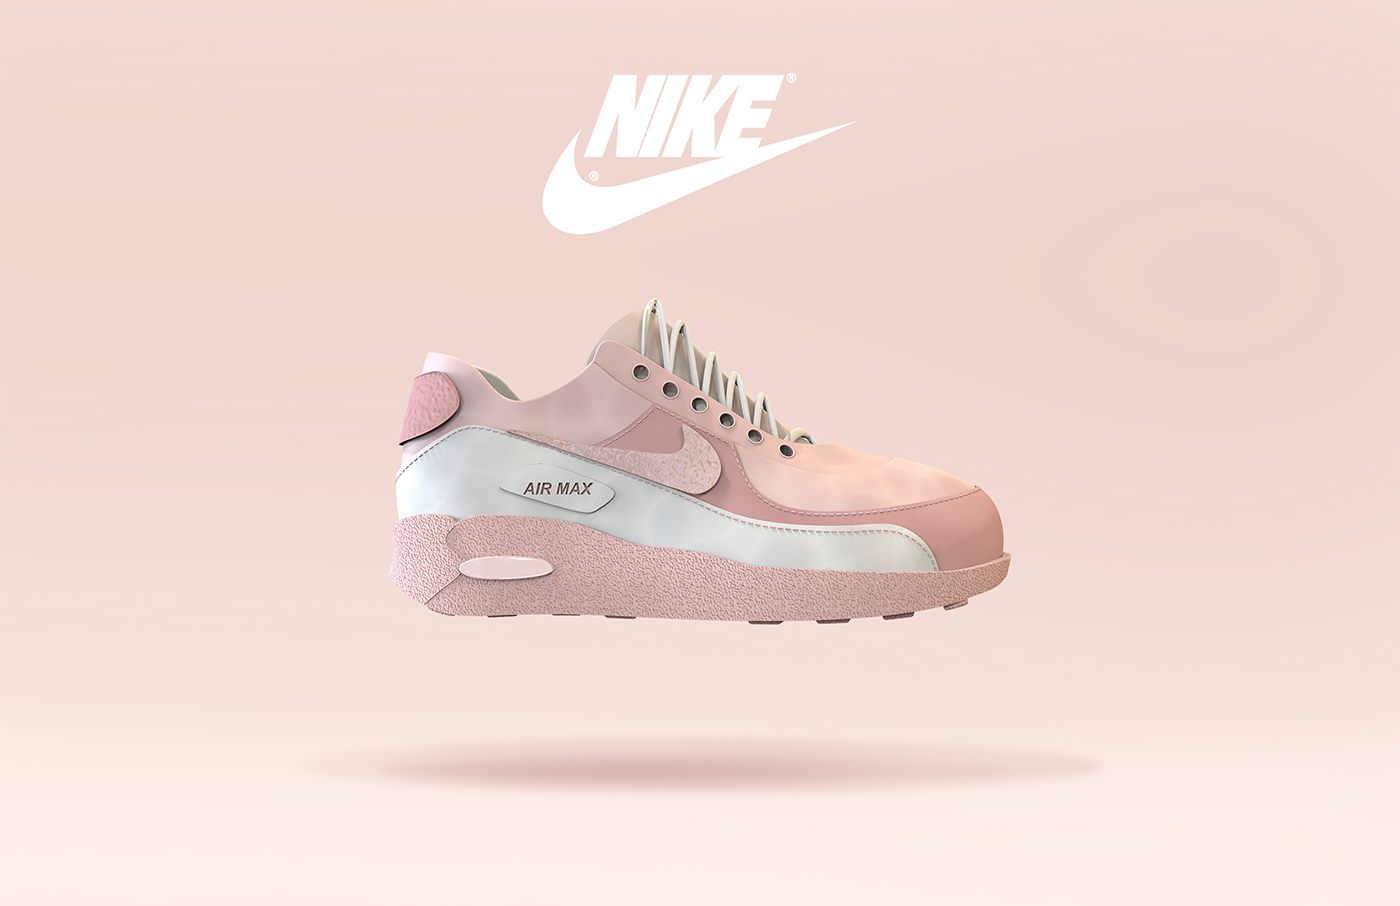 Rhino keyshot 3d modeling footwear design Nike air max